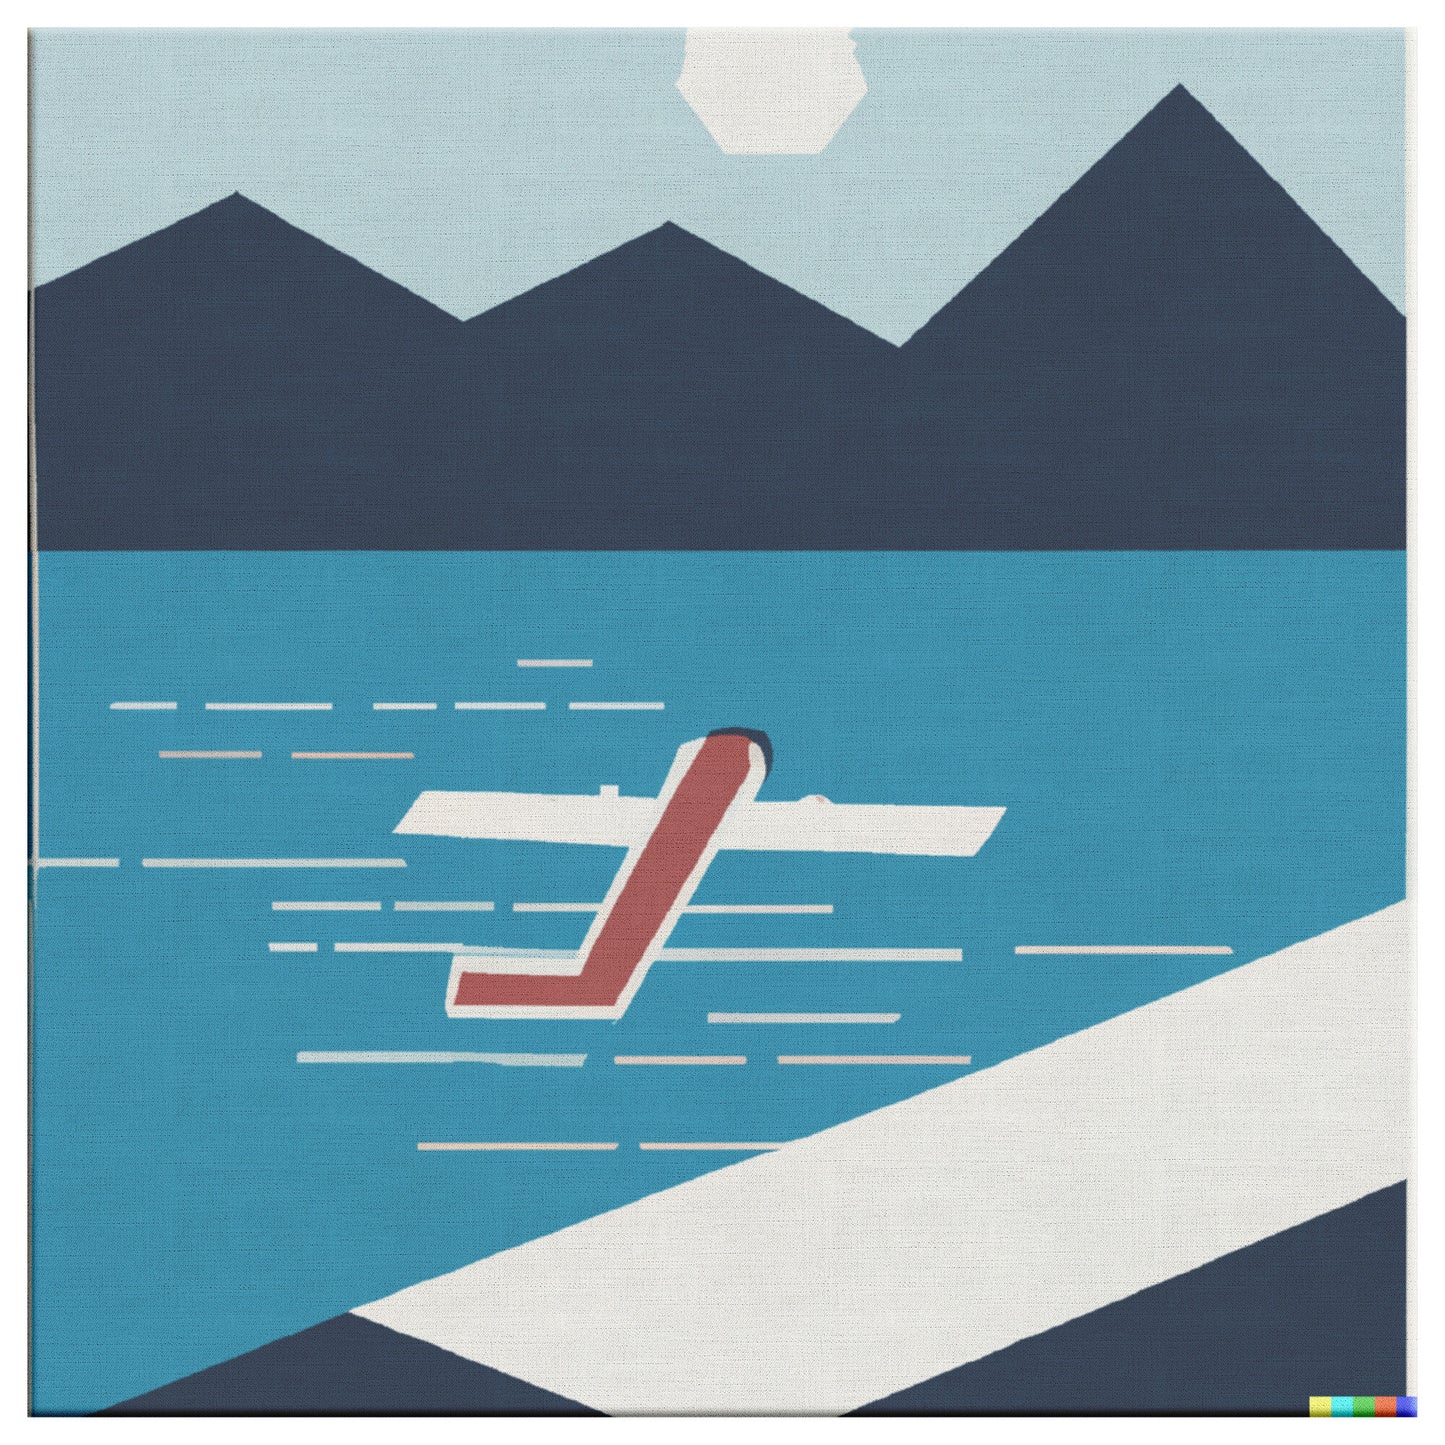 Scandi Abstract Wall Art, NFT Backed, Print of a Seaplane Landing on a Mountain Lake